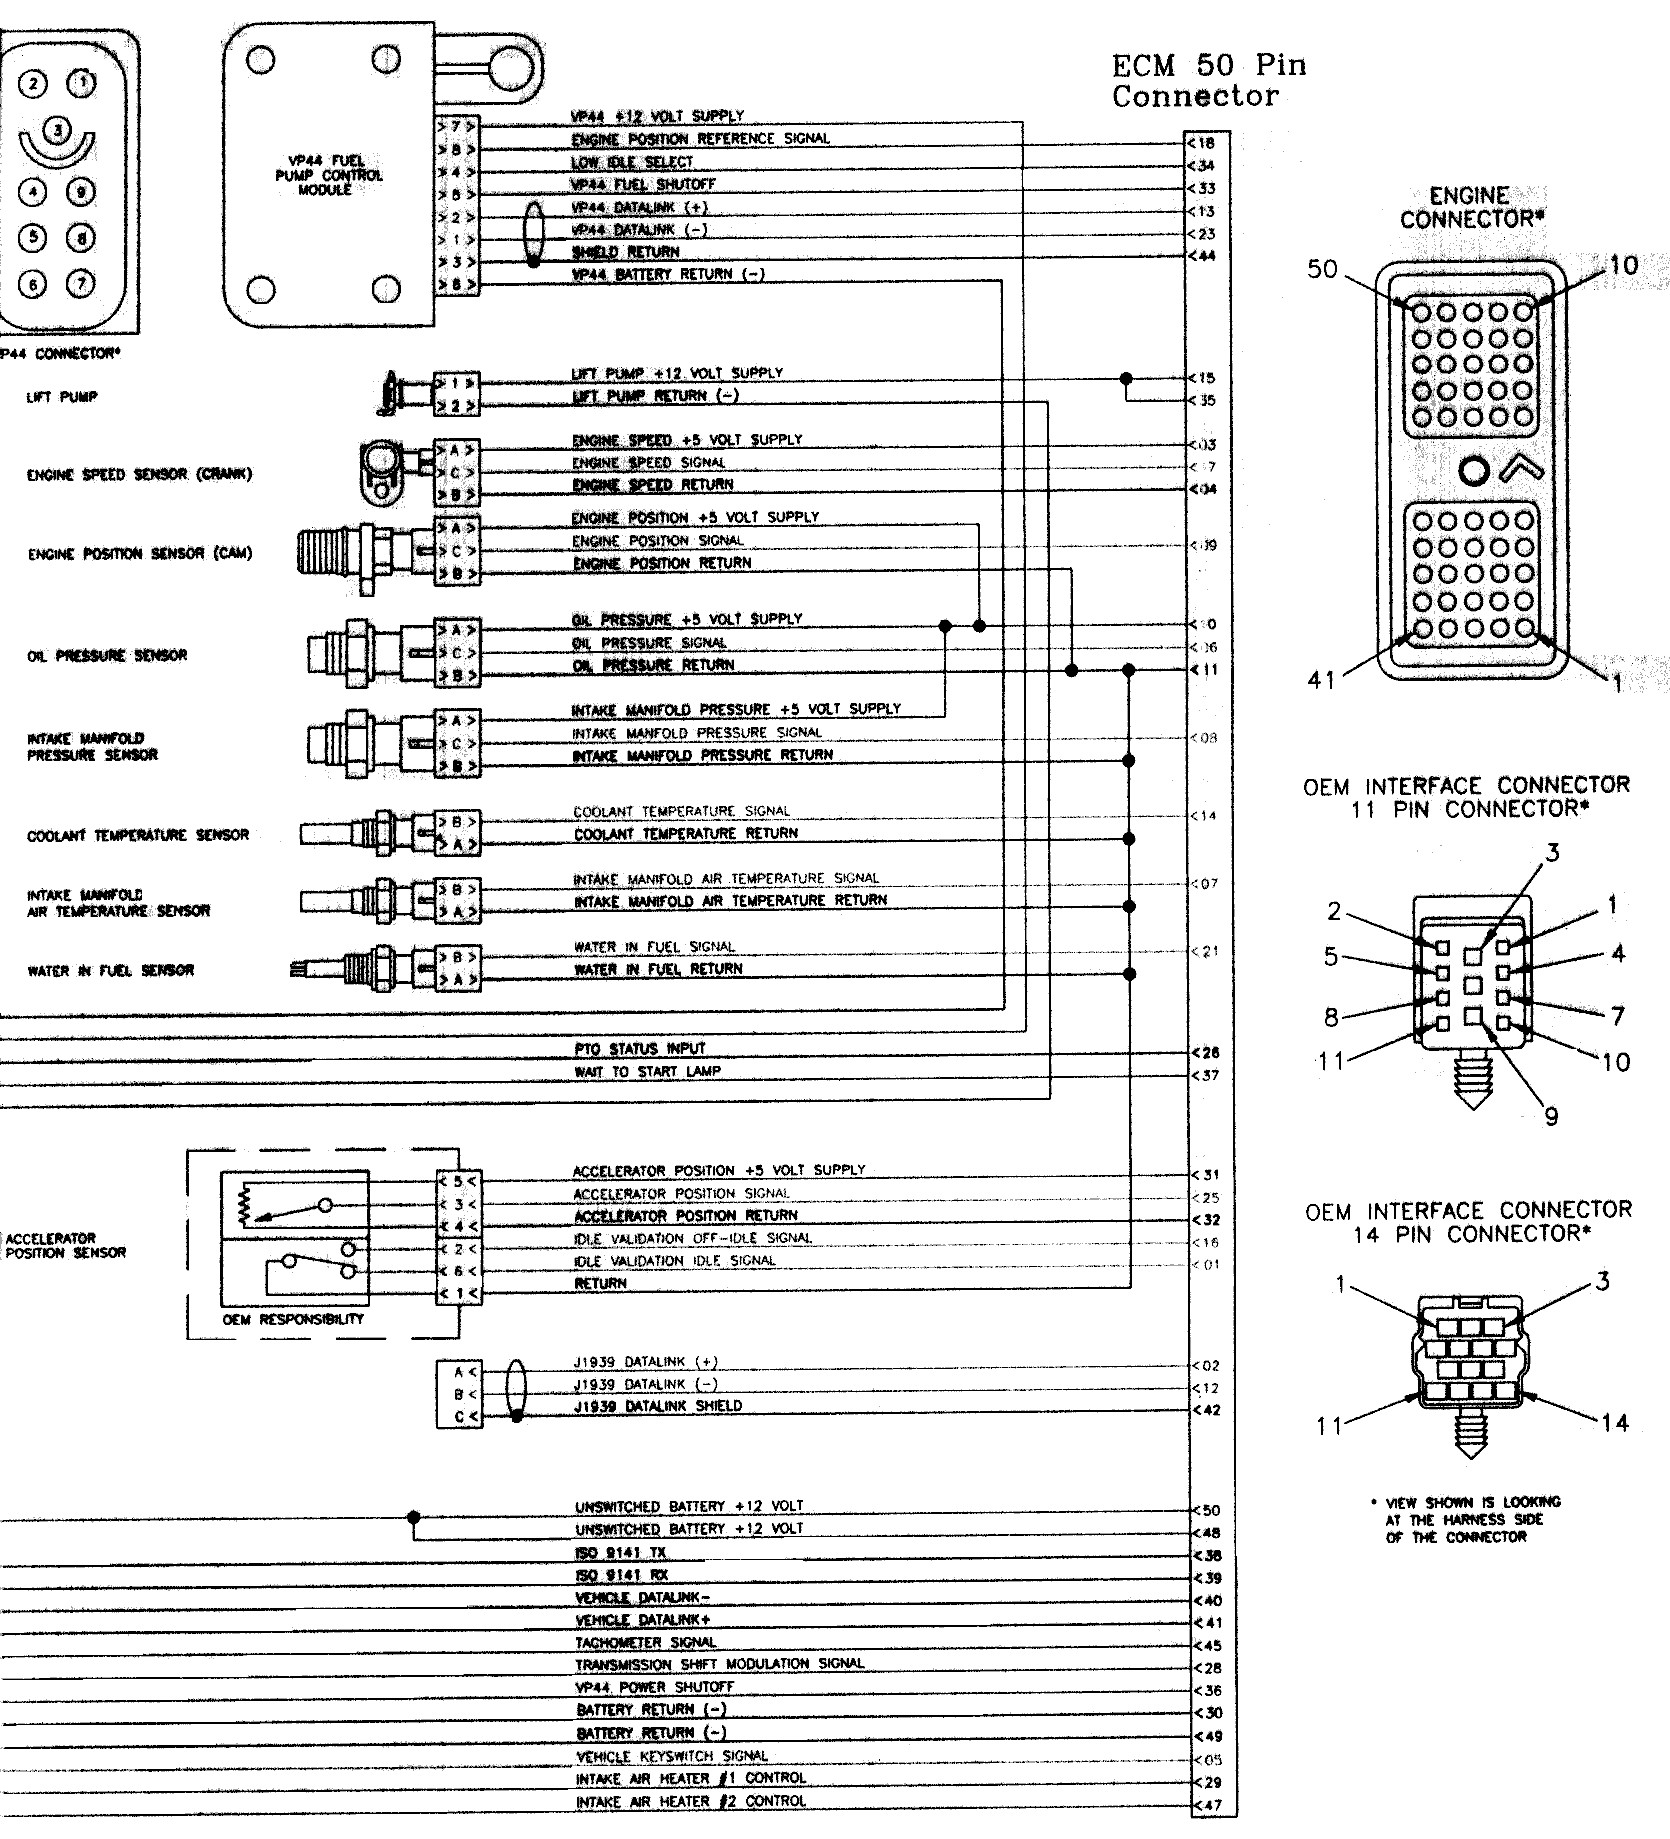 Cummins Diesel Engine Diagram Dodge Cummins Diesel Fuel Line Diagram Dodge Obd Connector Wiring Of Cummins Diesel Engine Diagram